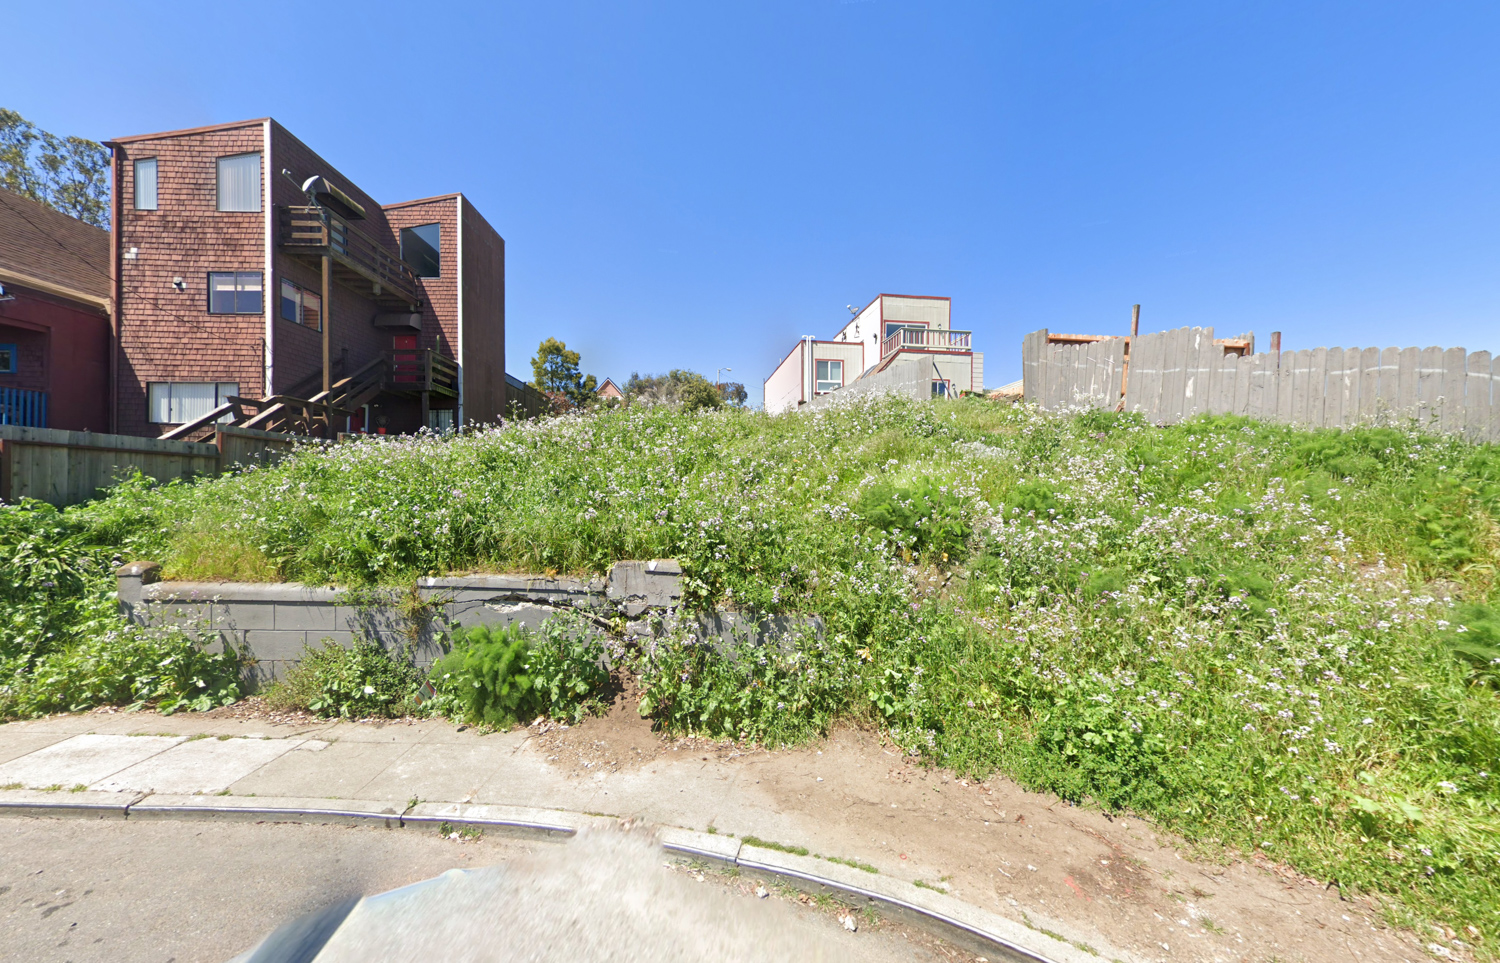 6 Caine Avenue, image via Google Street View